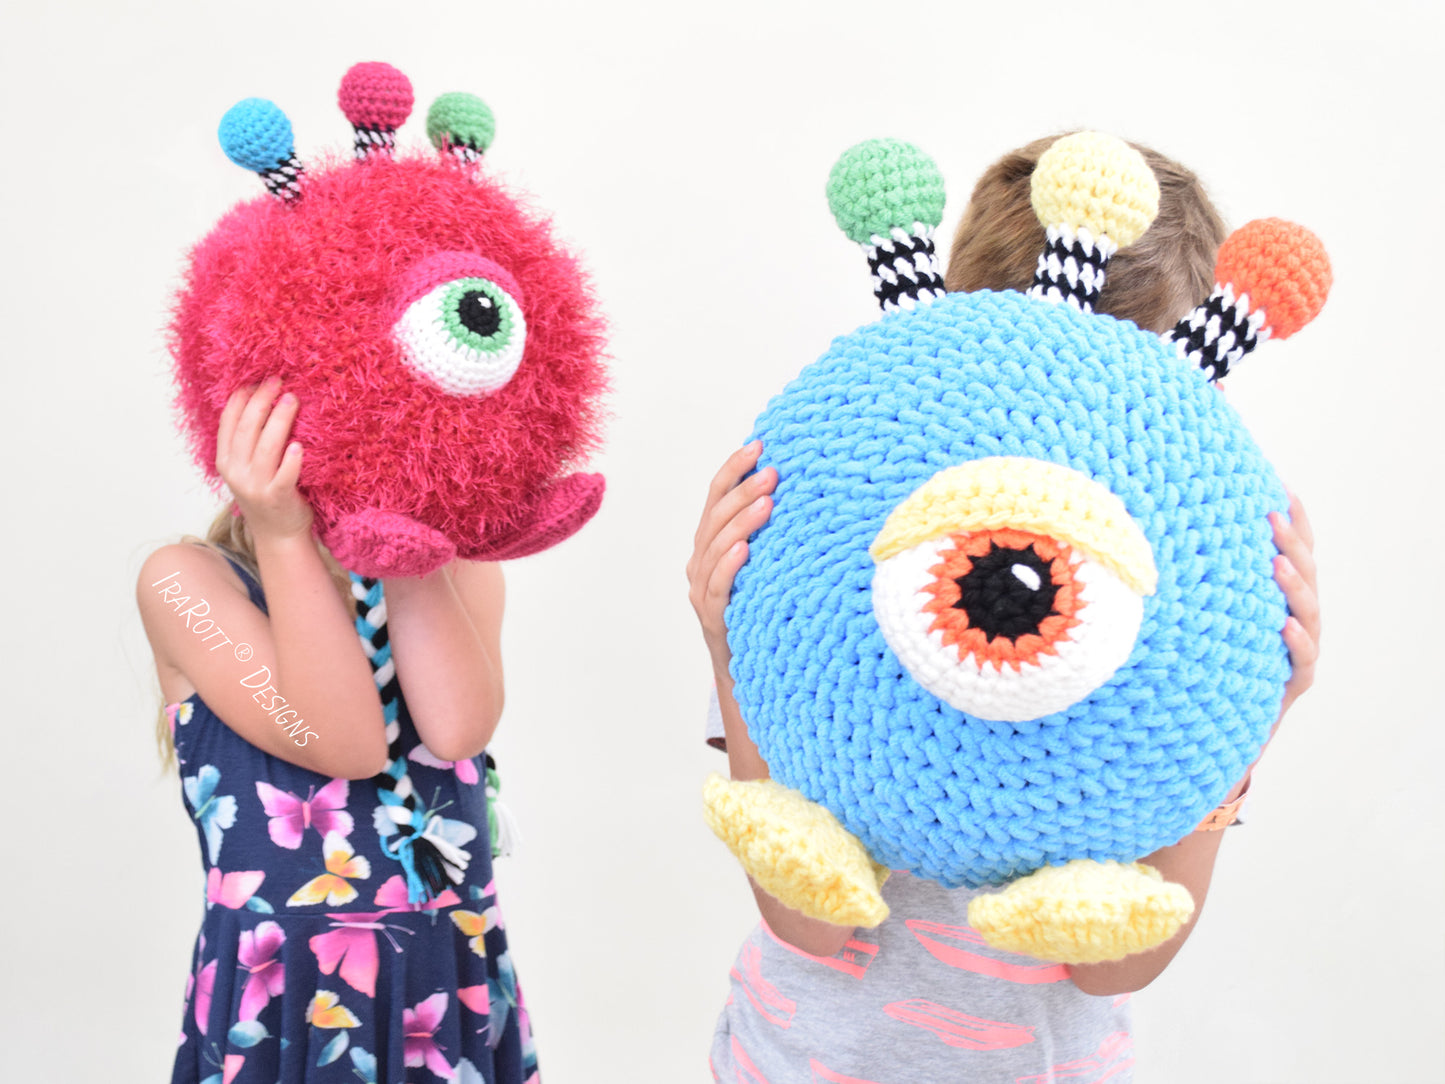 Neon The Gumball Monster Toy Pillow Crochet Pattern